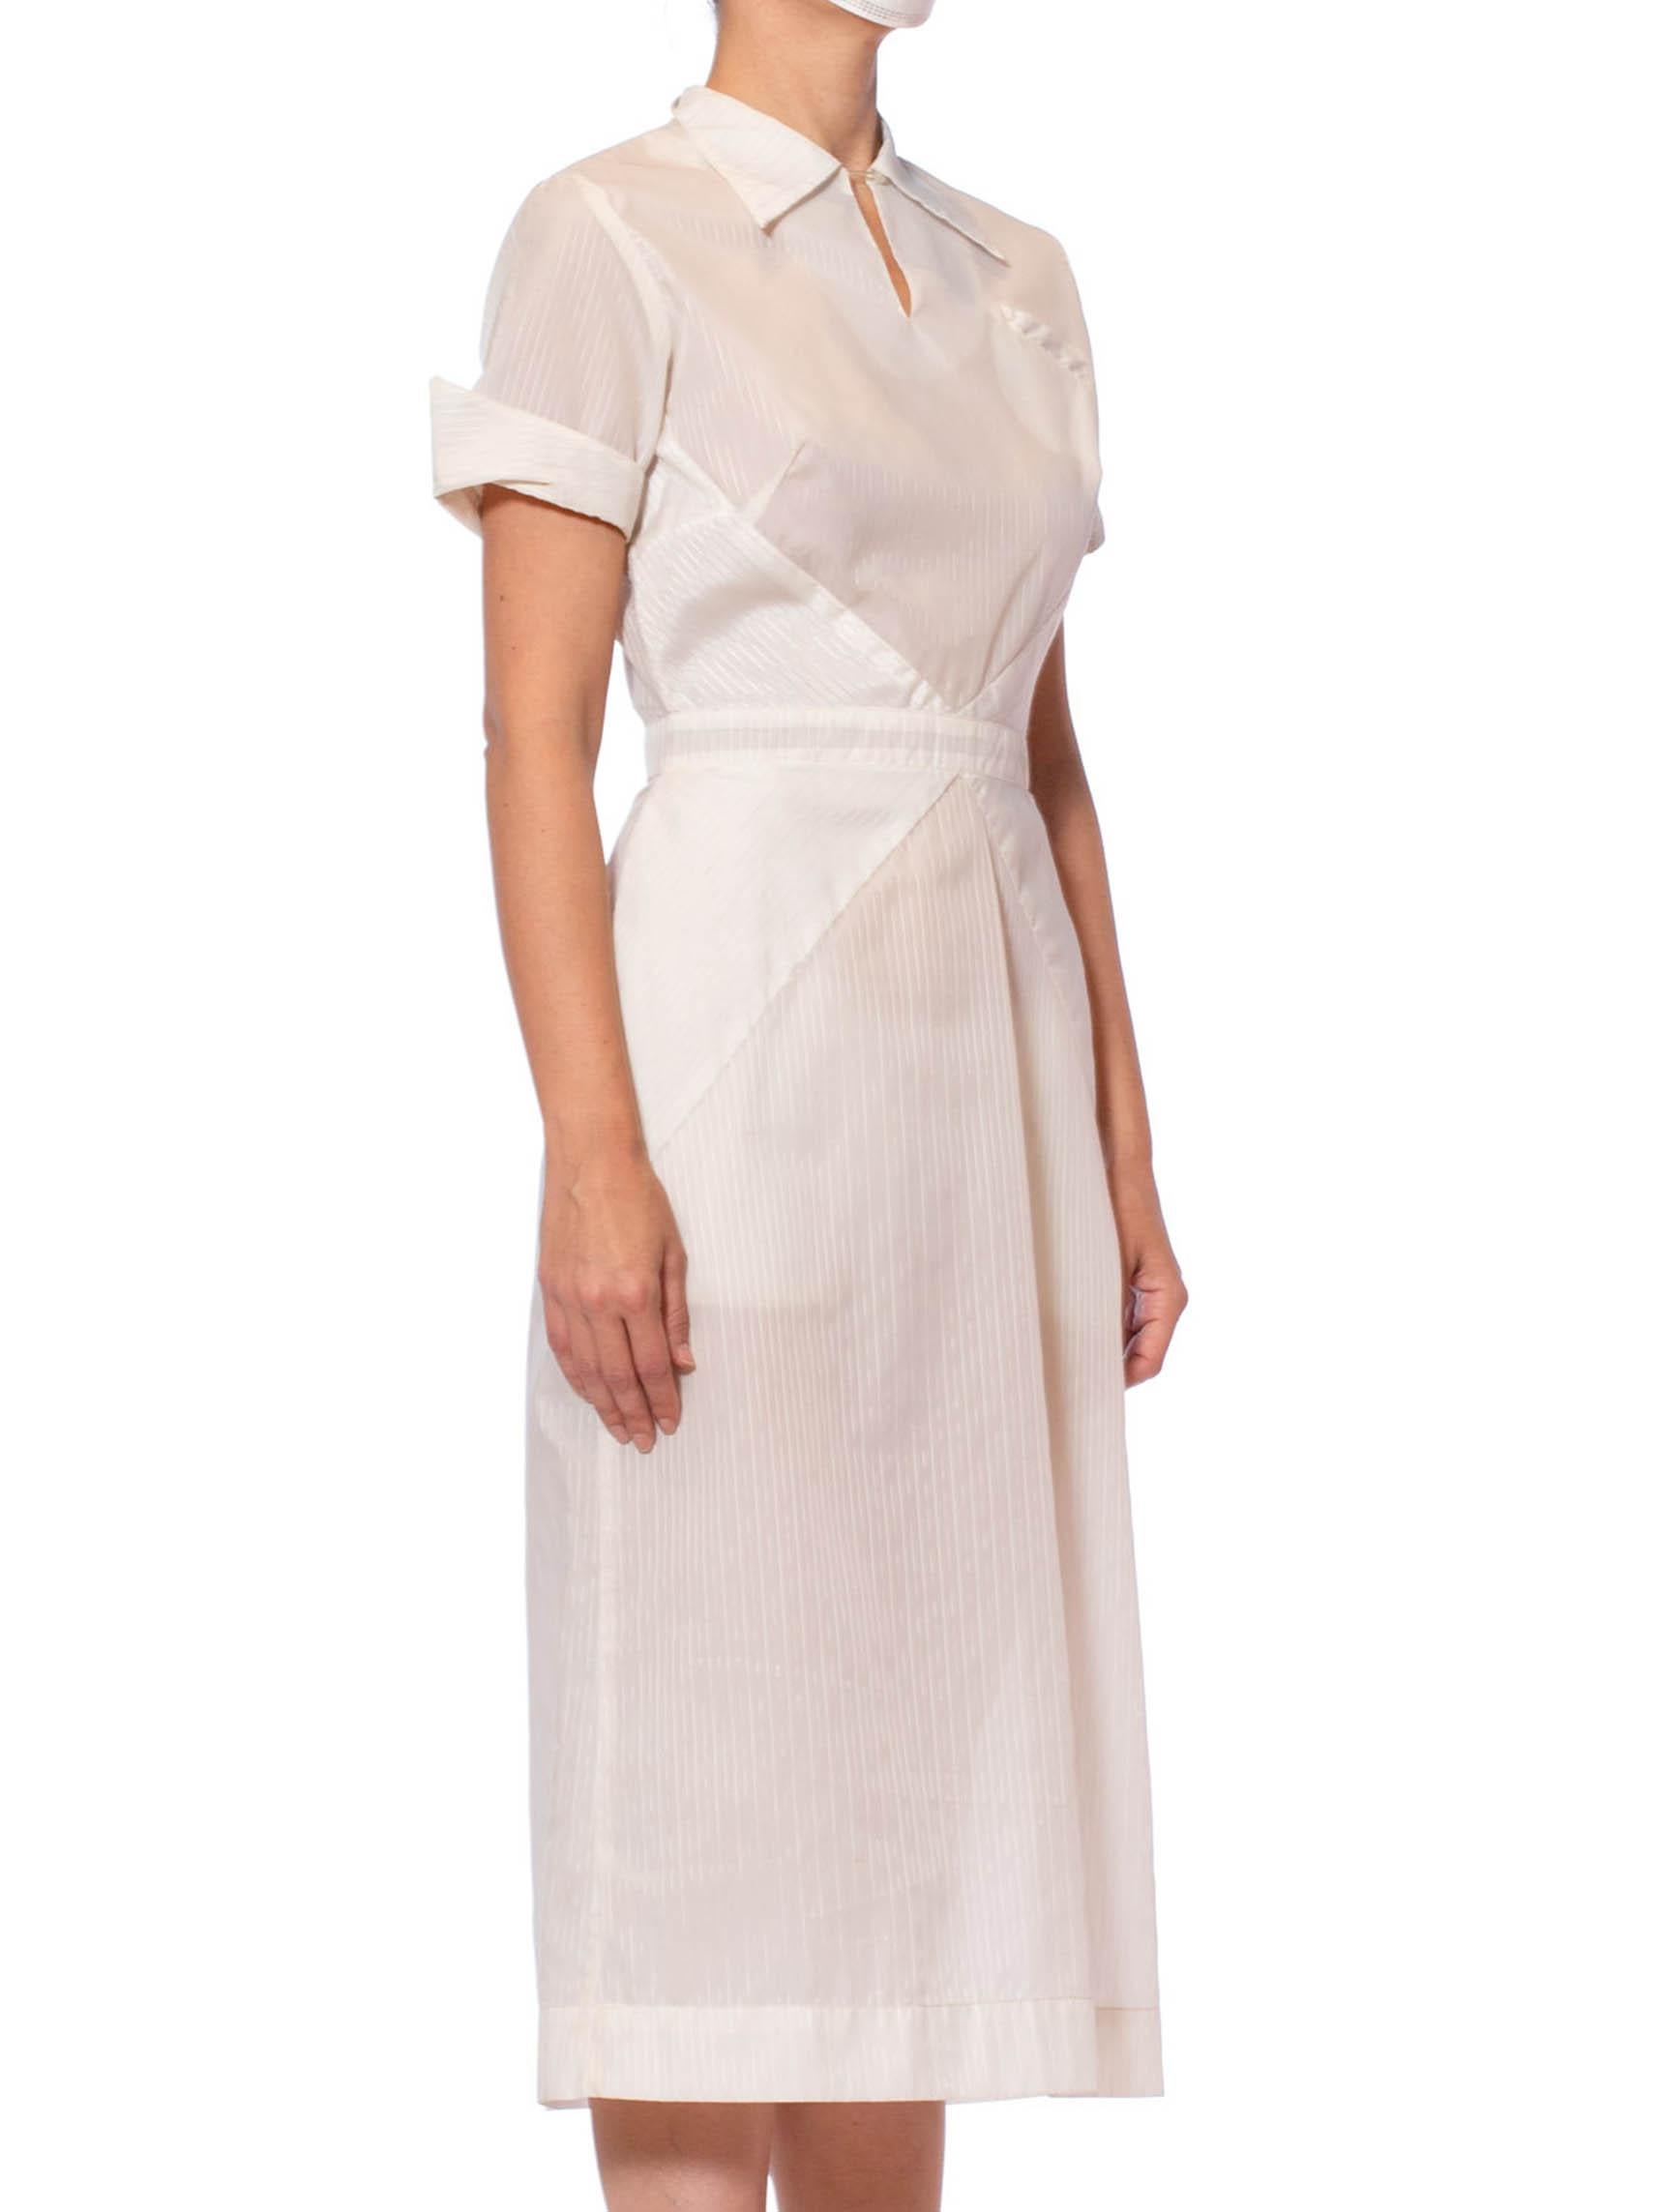 1950S White Nylon Pin-Up Nurse Uniform Dress 4